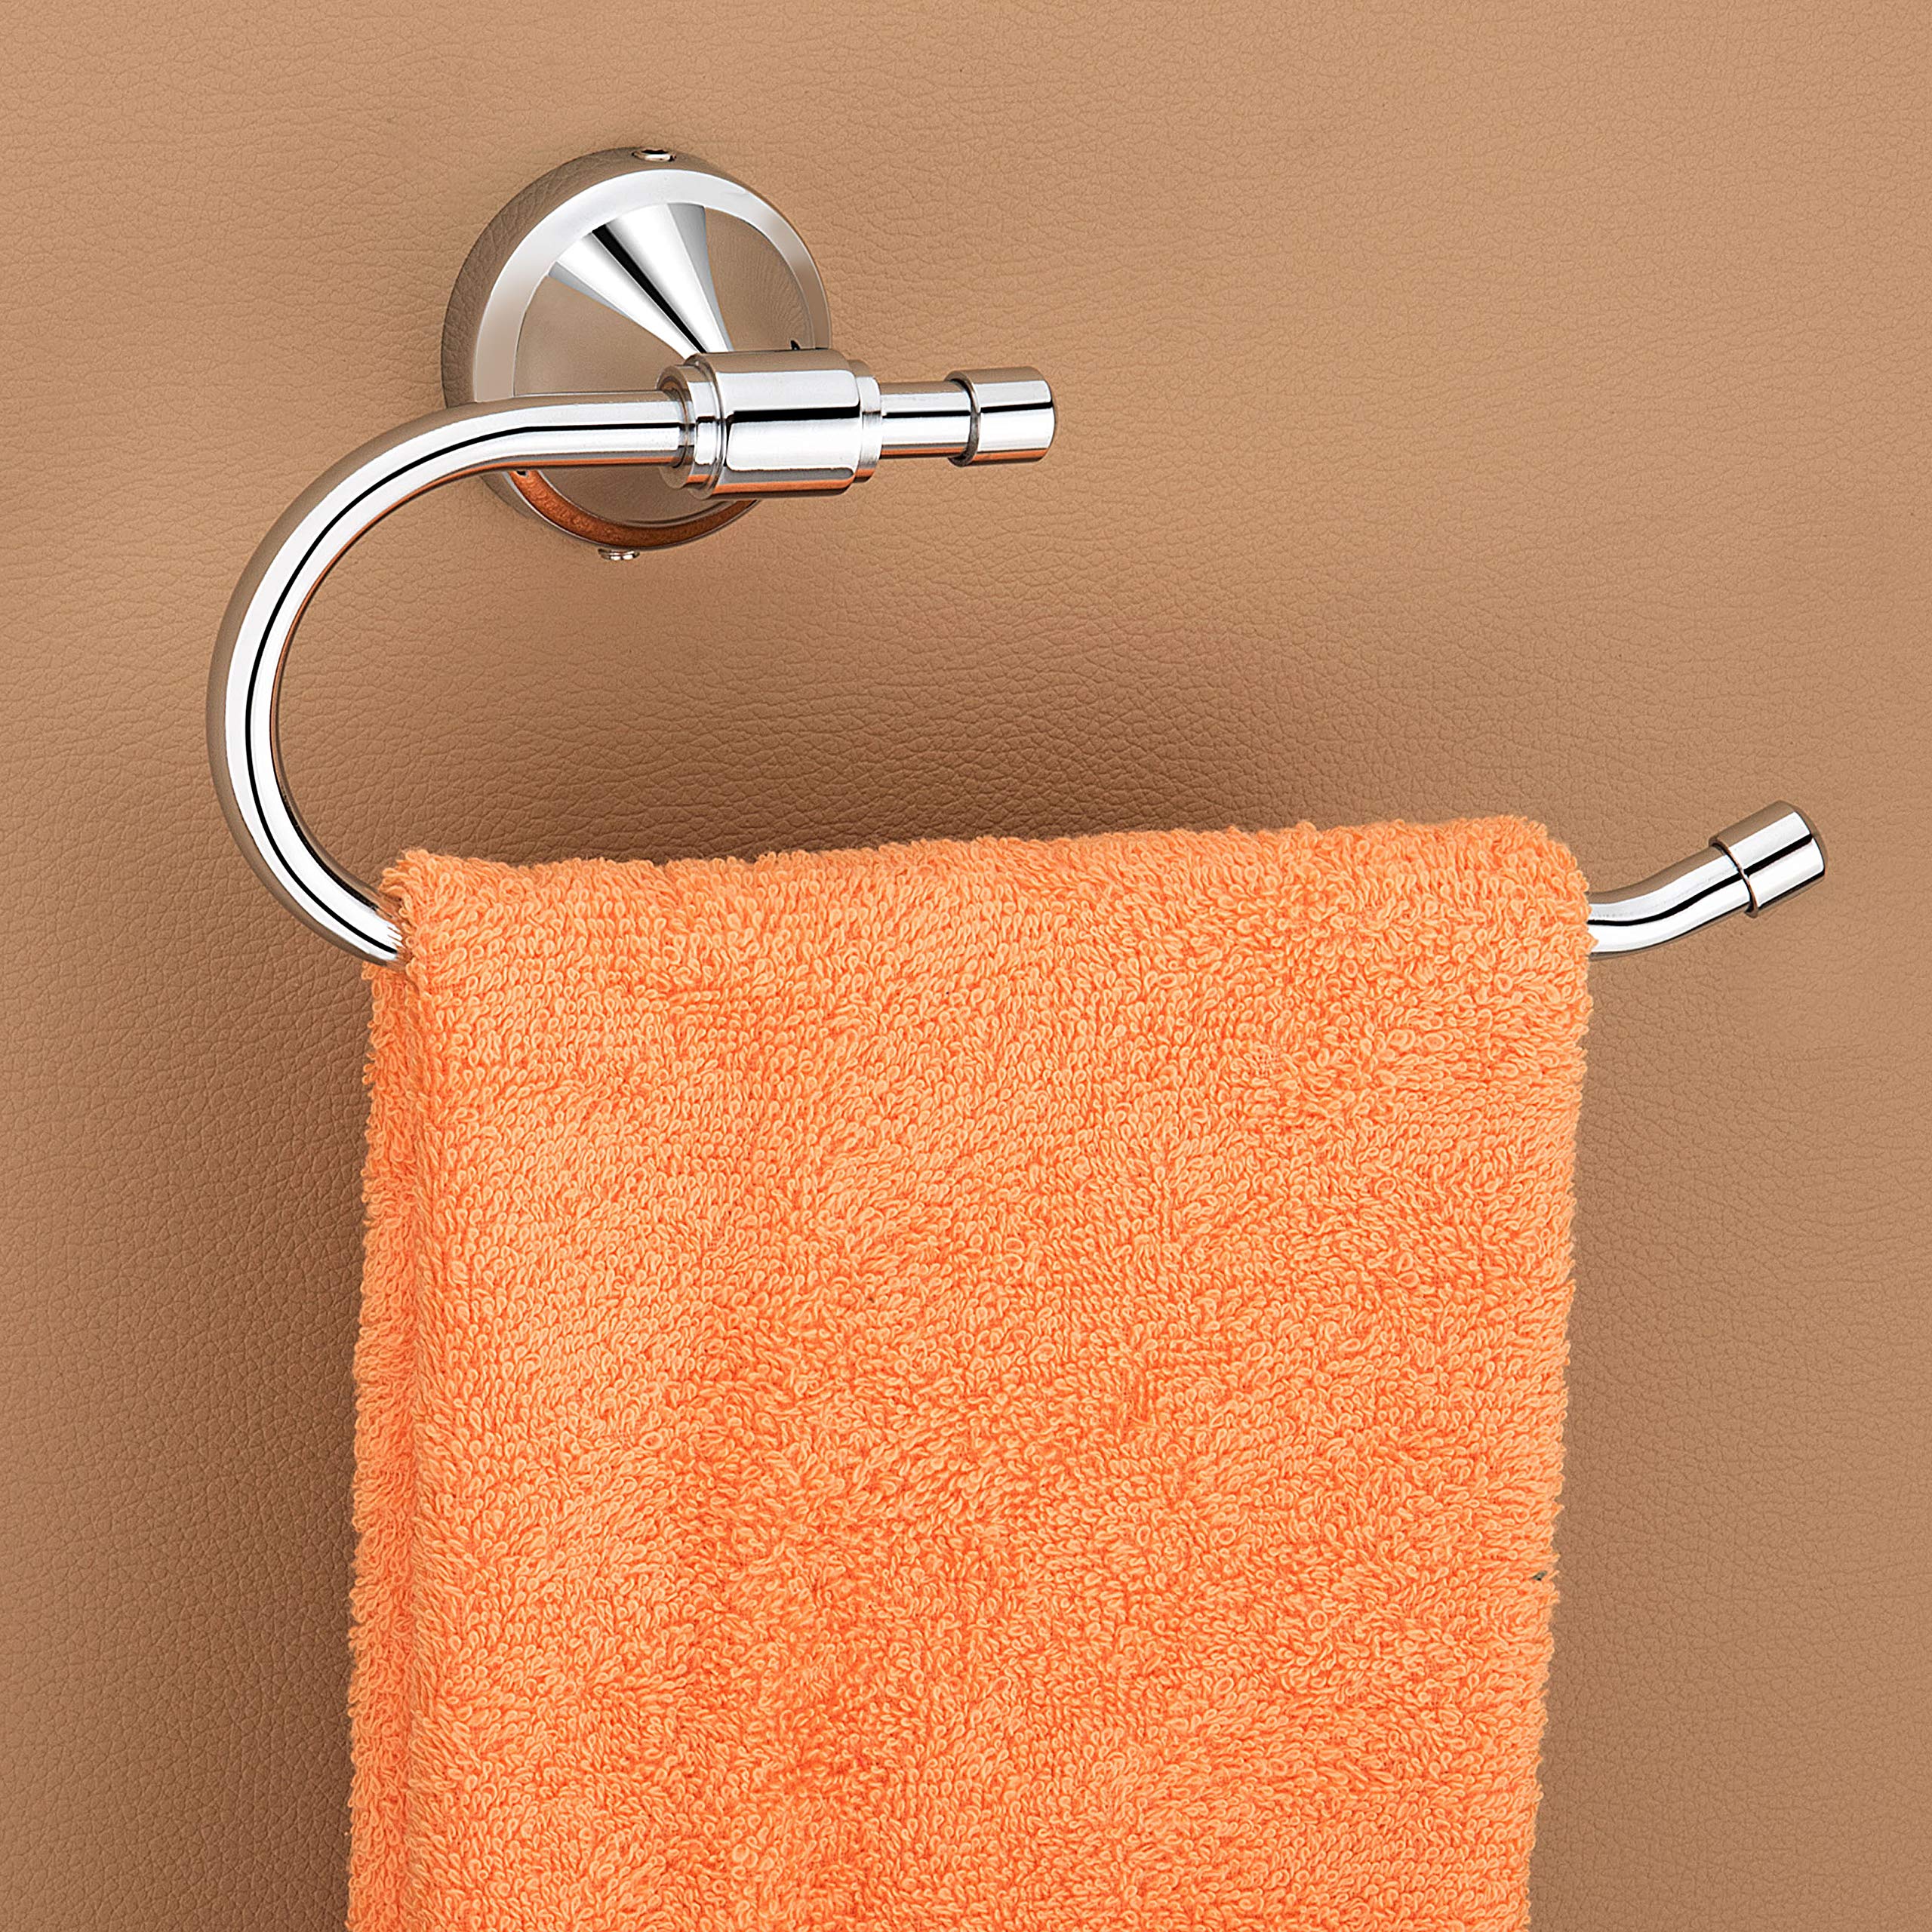 Plantex Stainless Steel 304 Grade Bathroom Accessories Set / Bathroom Hanger for Towel / Towel Bar / Napkin Ring / Tumbler Holder / Soap Dish / Robe Hook (Niko - Pack of 5)